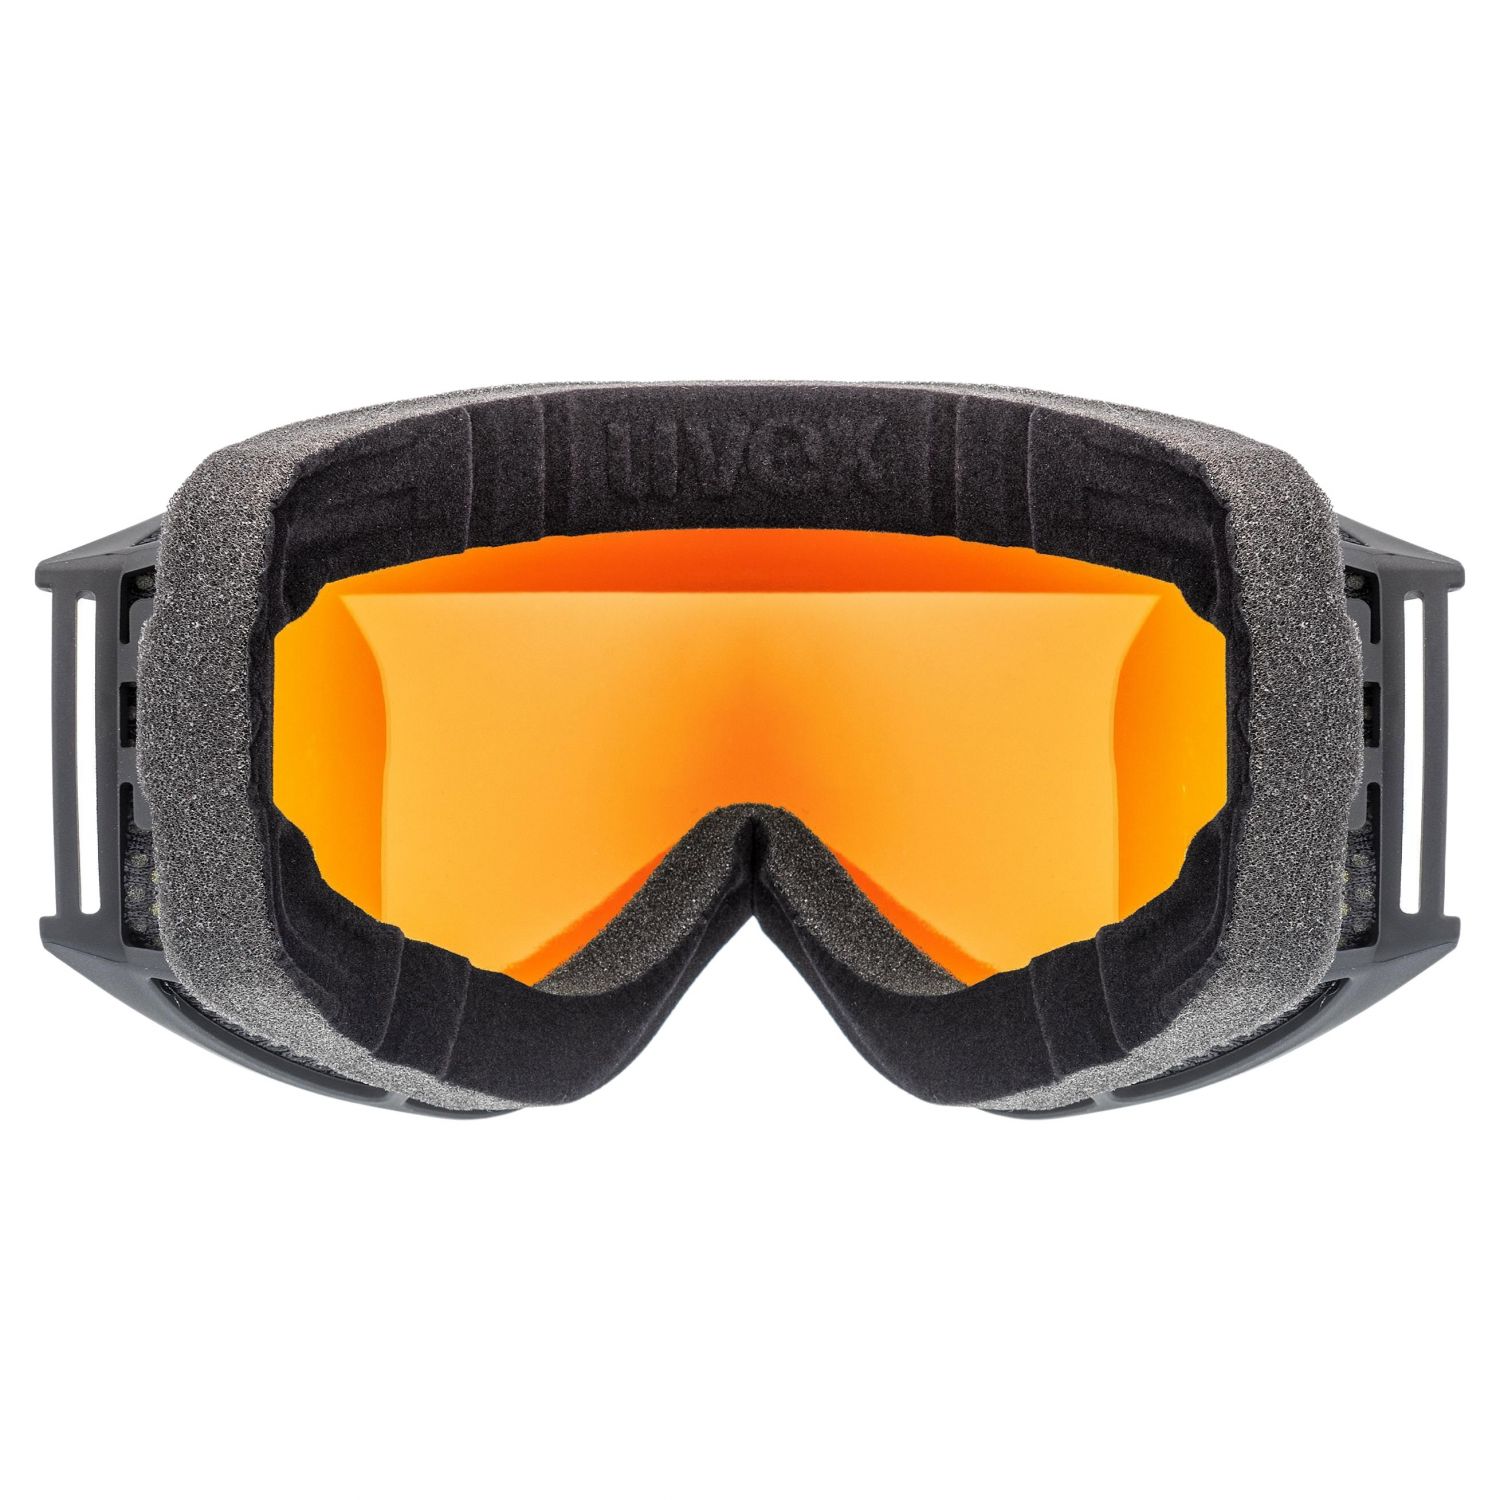 Uvex g.gl. 3000 CV, masque de ski, noir/orange